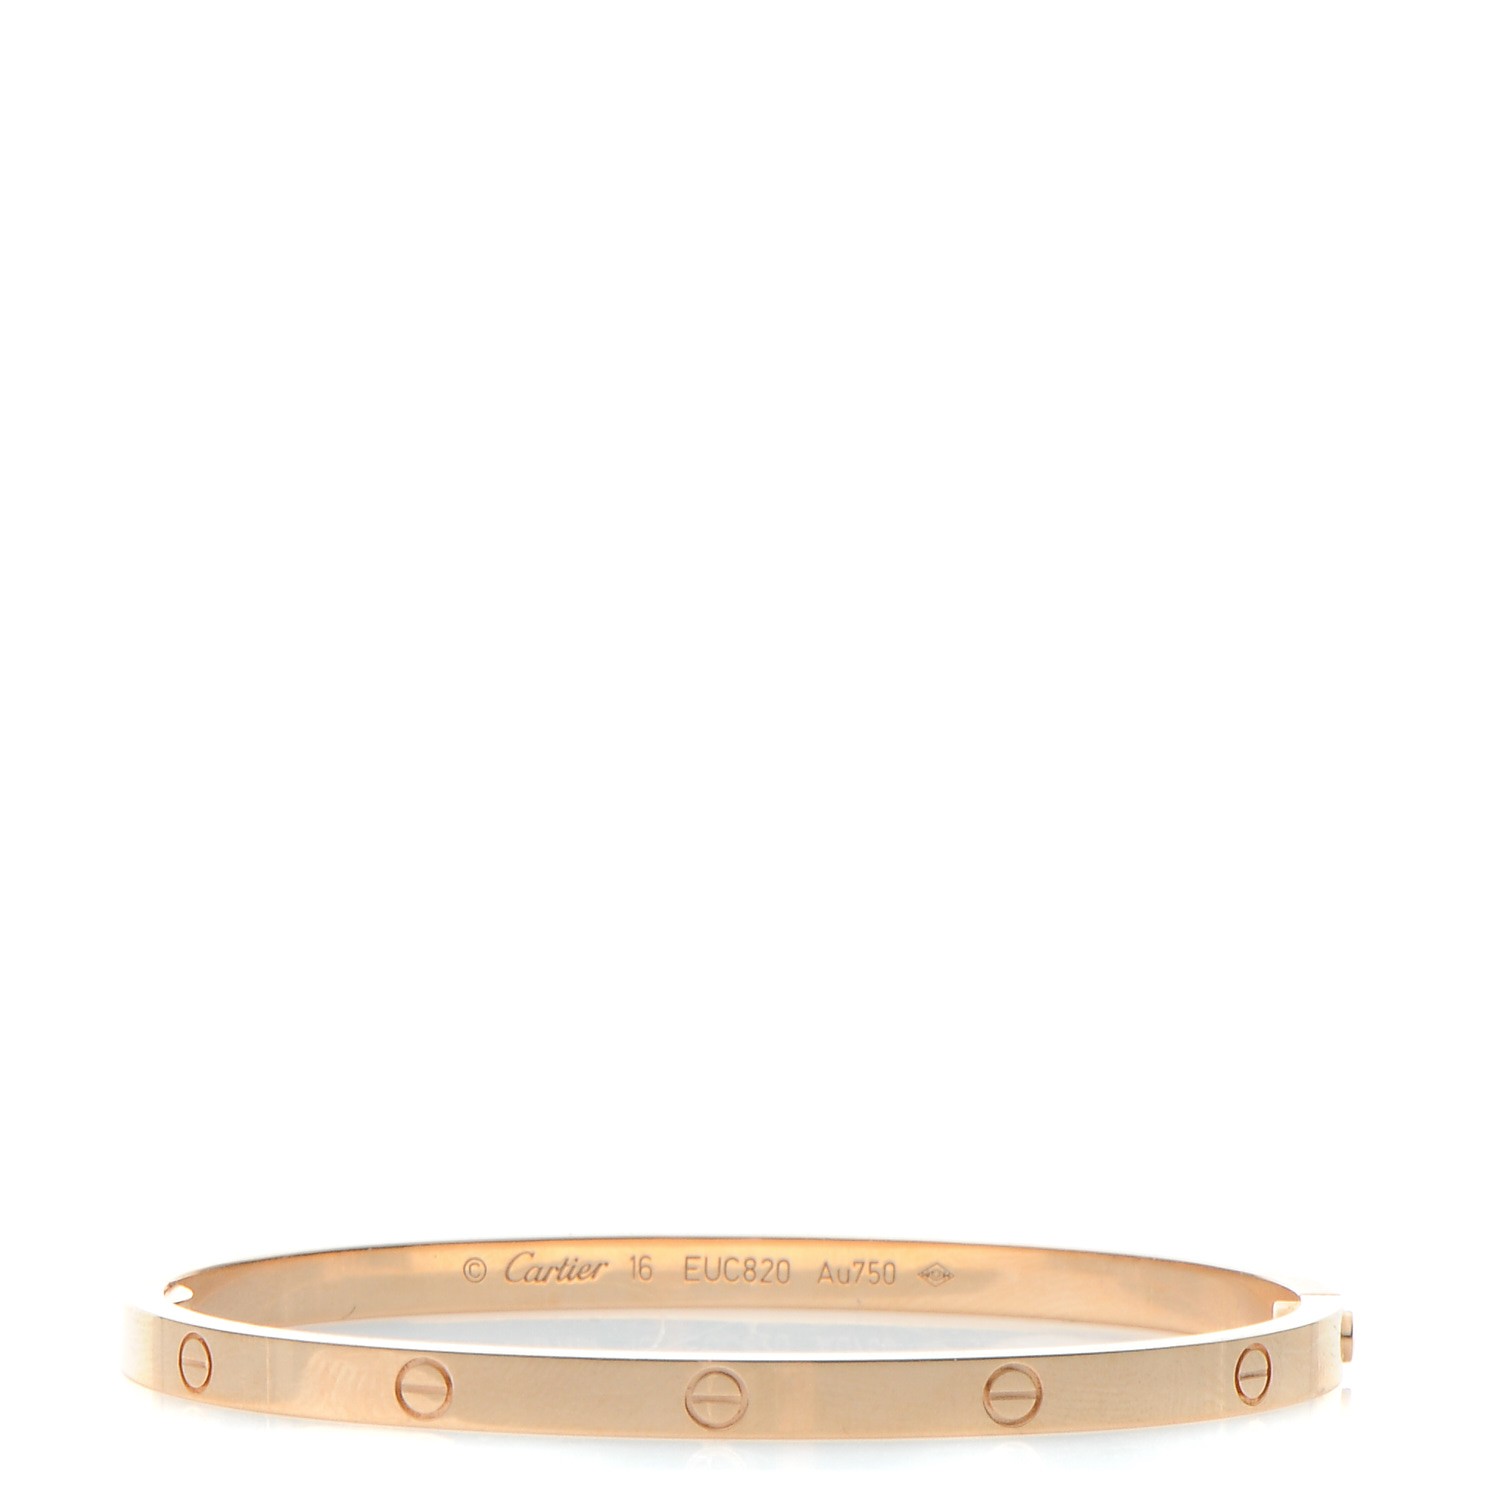 cartier love bracelet size 18 rose gold